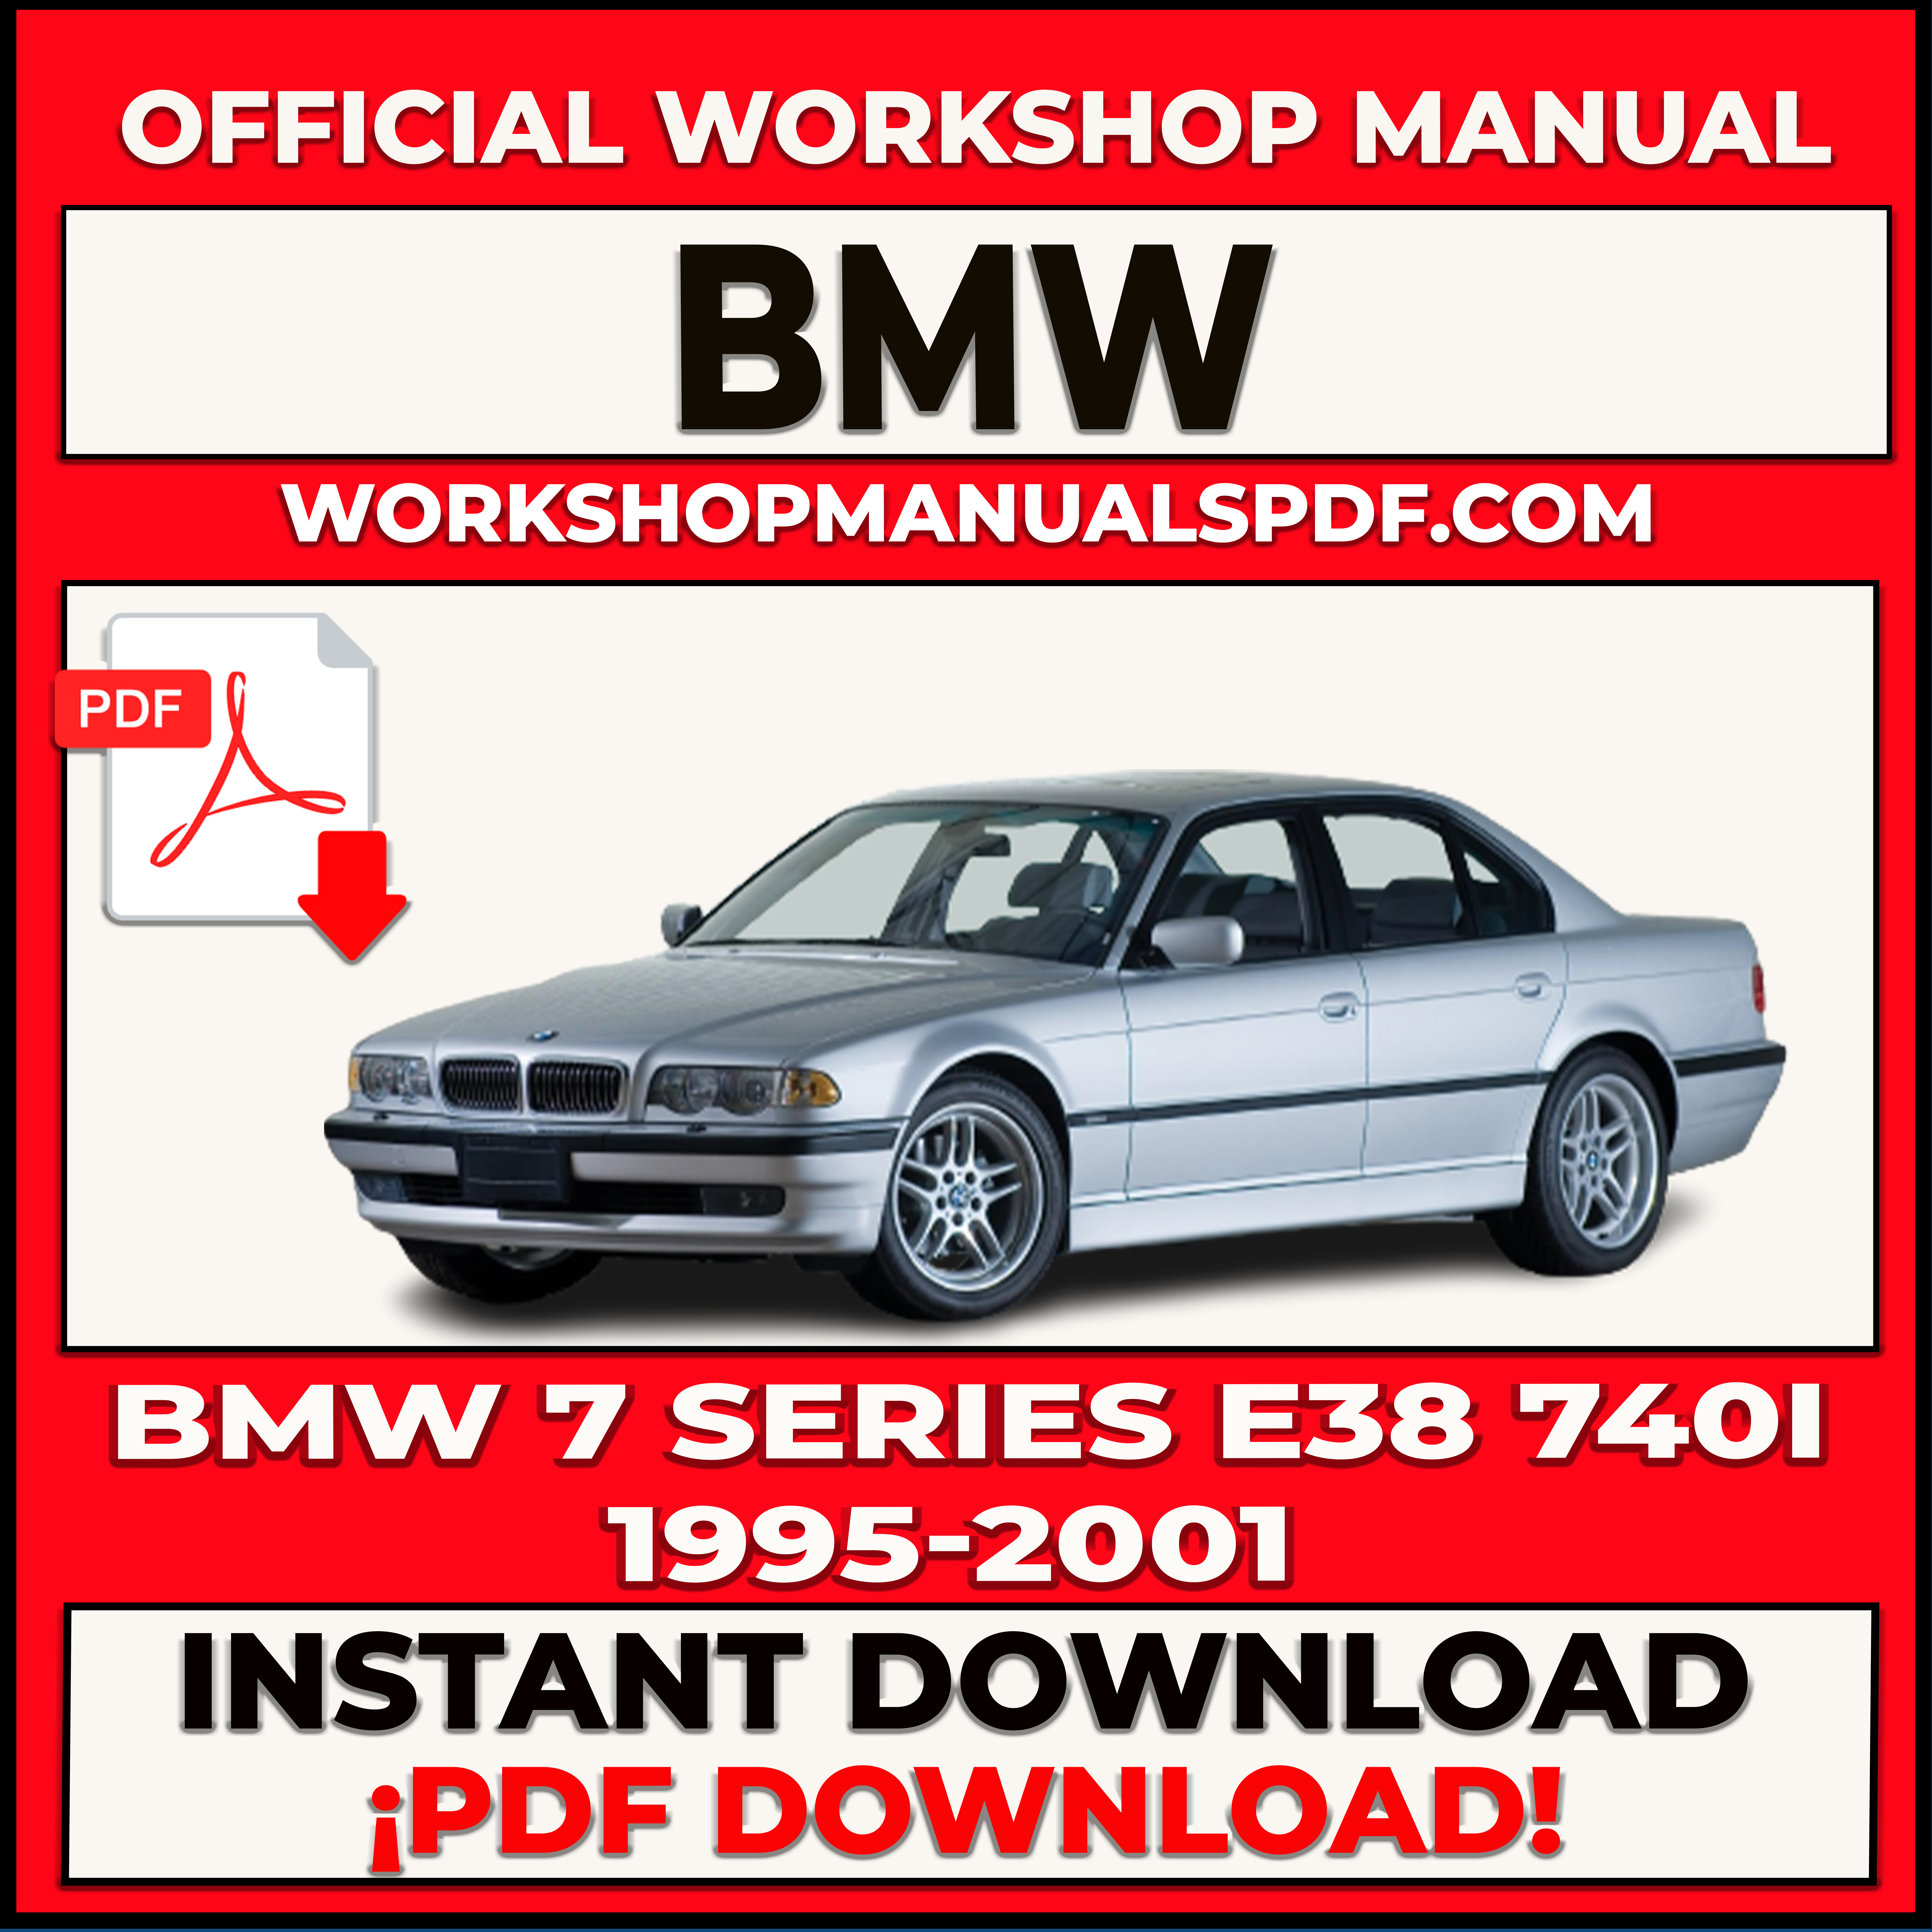 BMW 7 SERIES E38 740I 1995-2001 SERVICE MANUAL